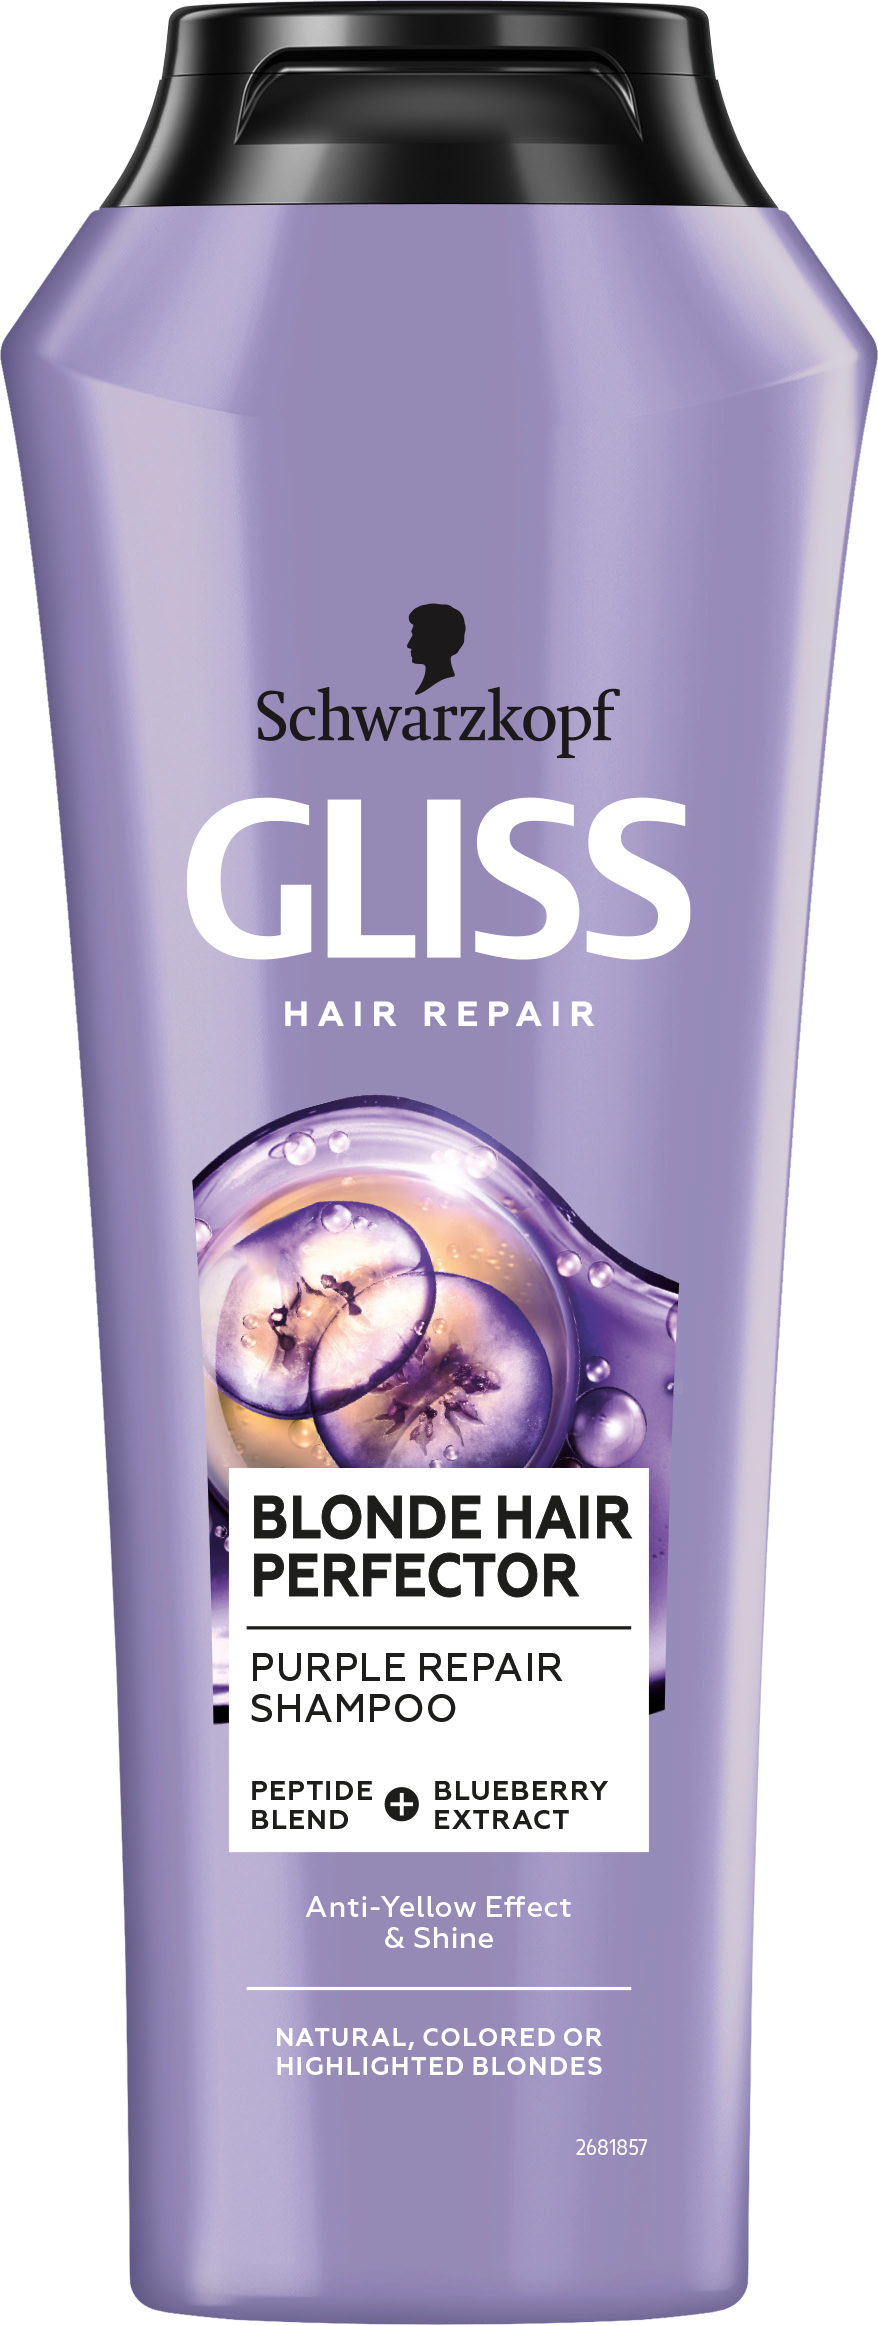 Шампунь тонирующий для светлых волос Gliss Blonde Hair Perfector, 250 мл - фото 1